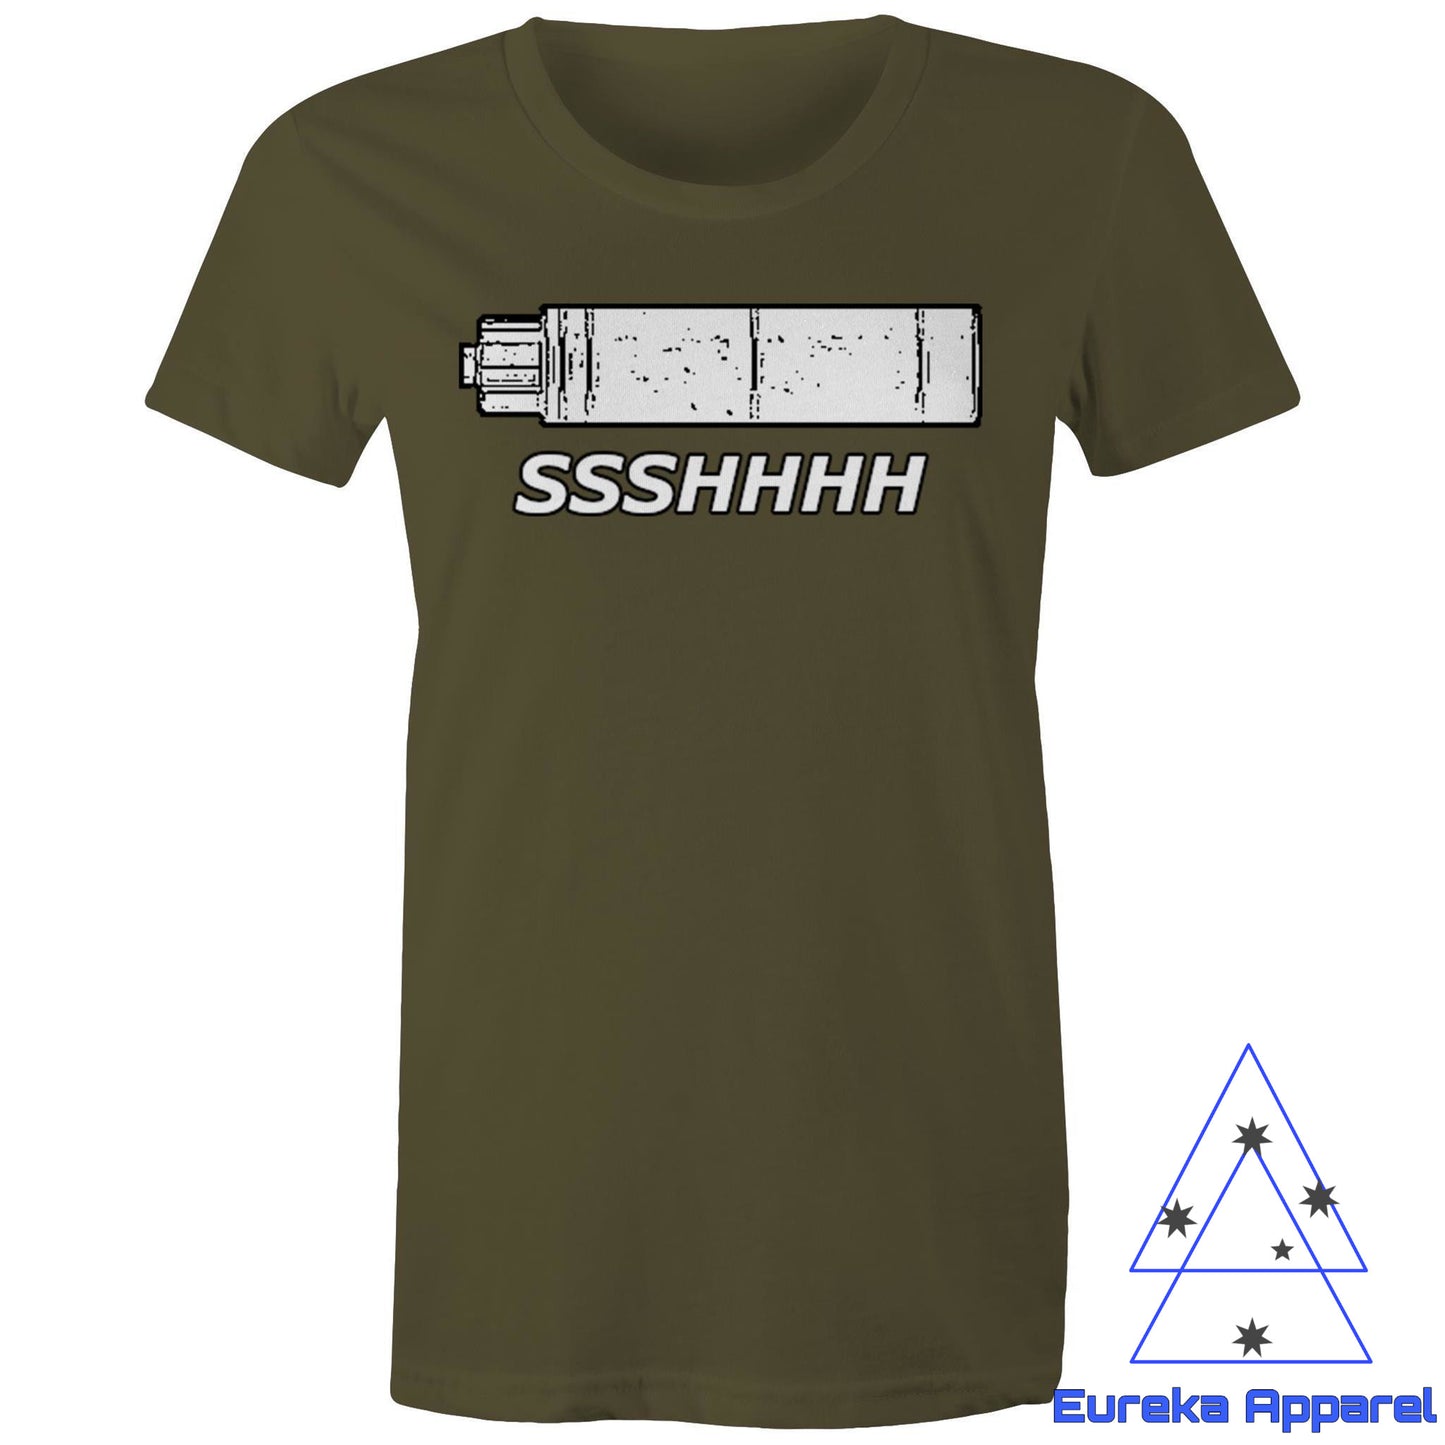 SSSHHHH Suppressor Women's AS Color 100% cotton maple t-shirt.